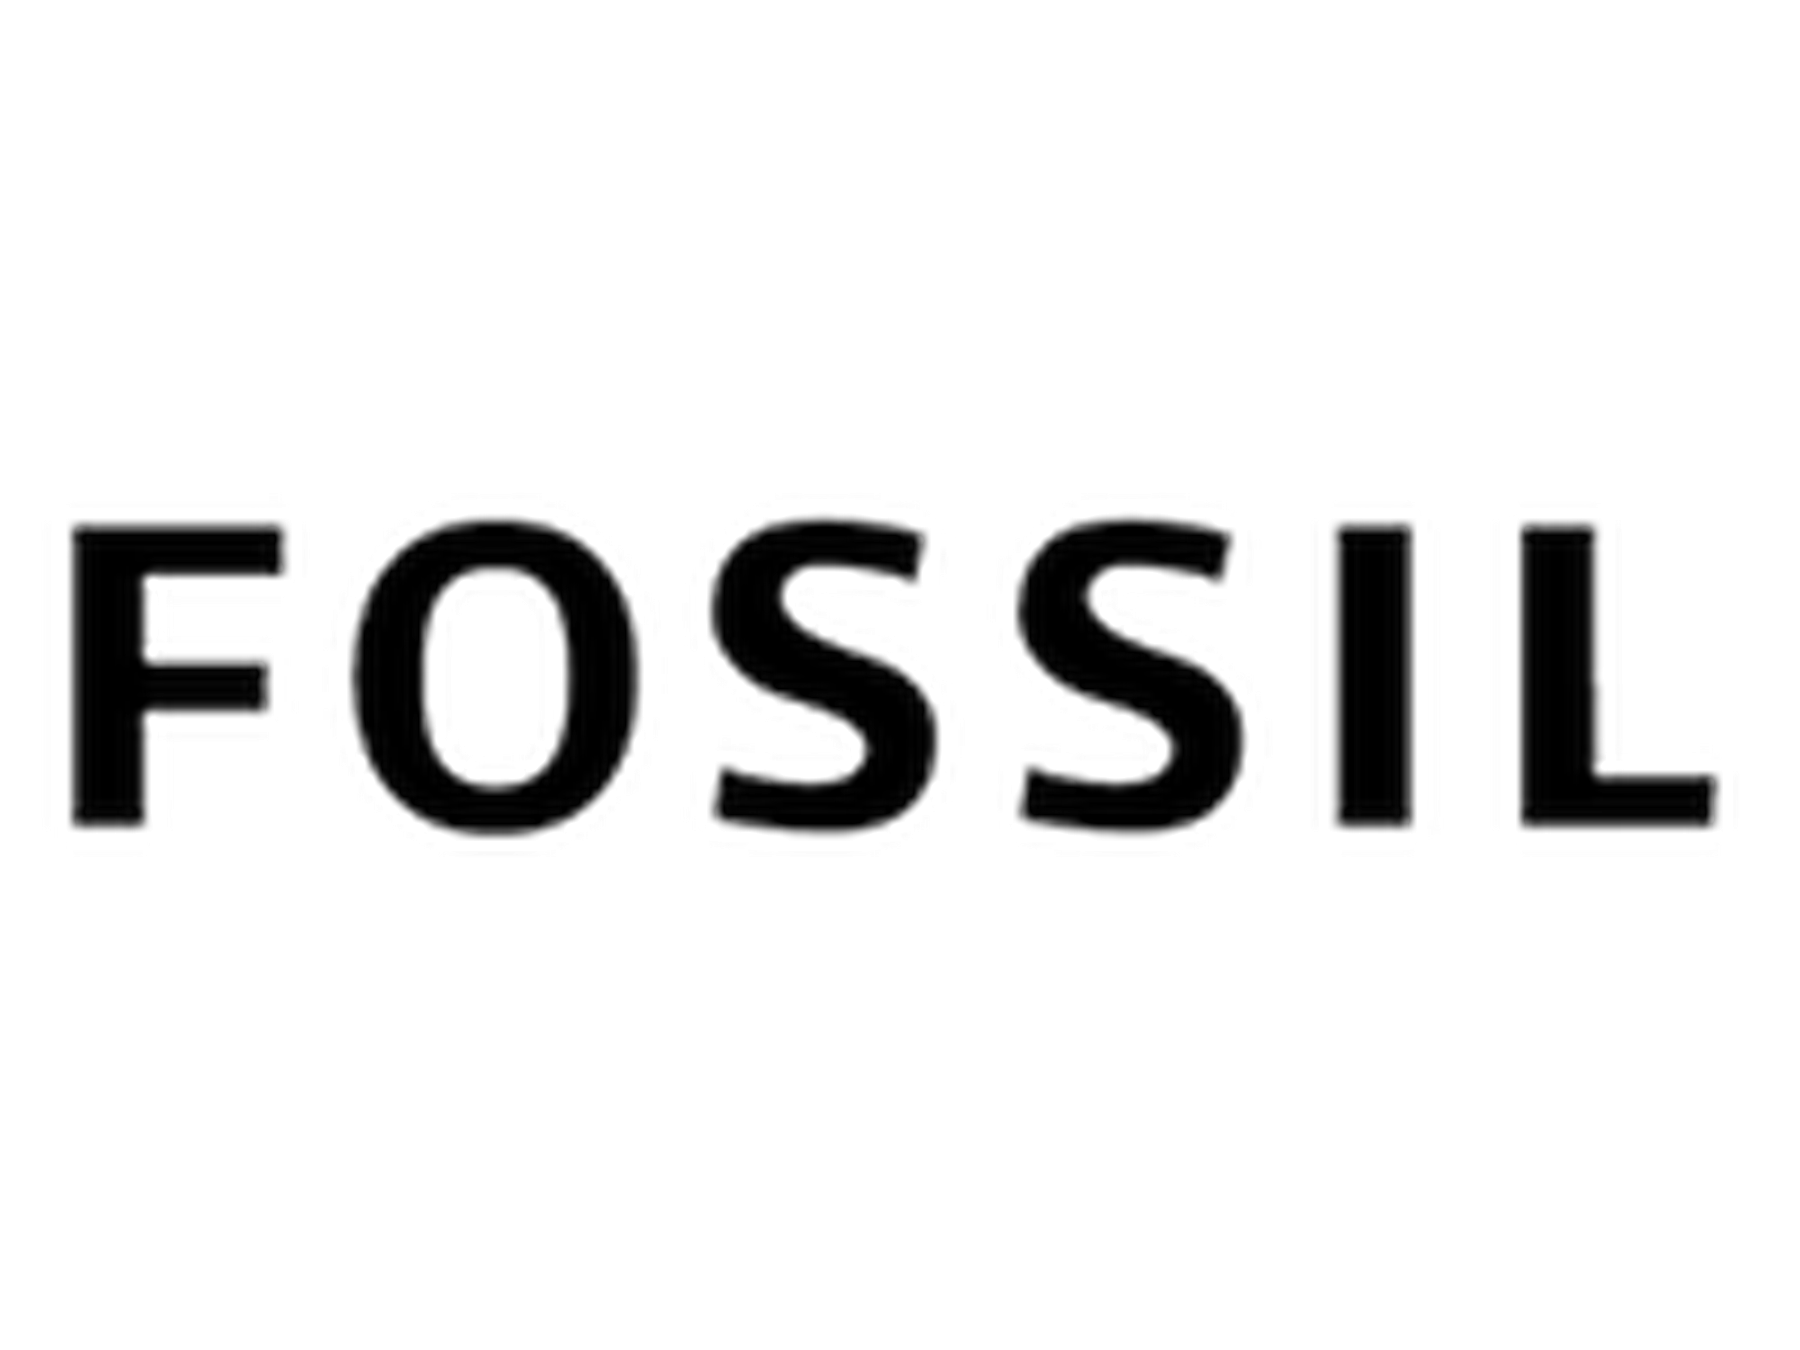 Promo Fossil